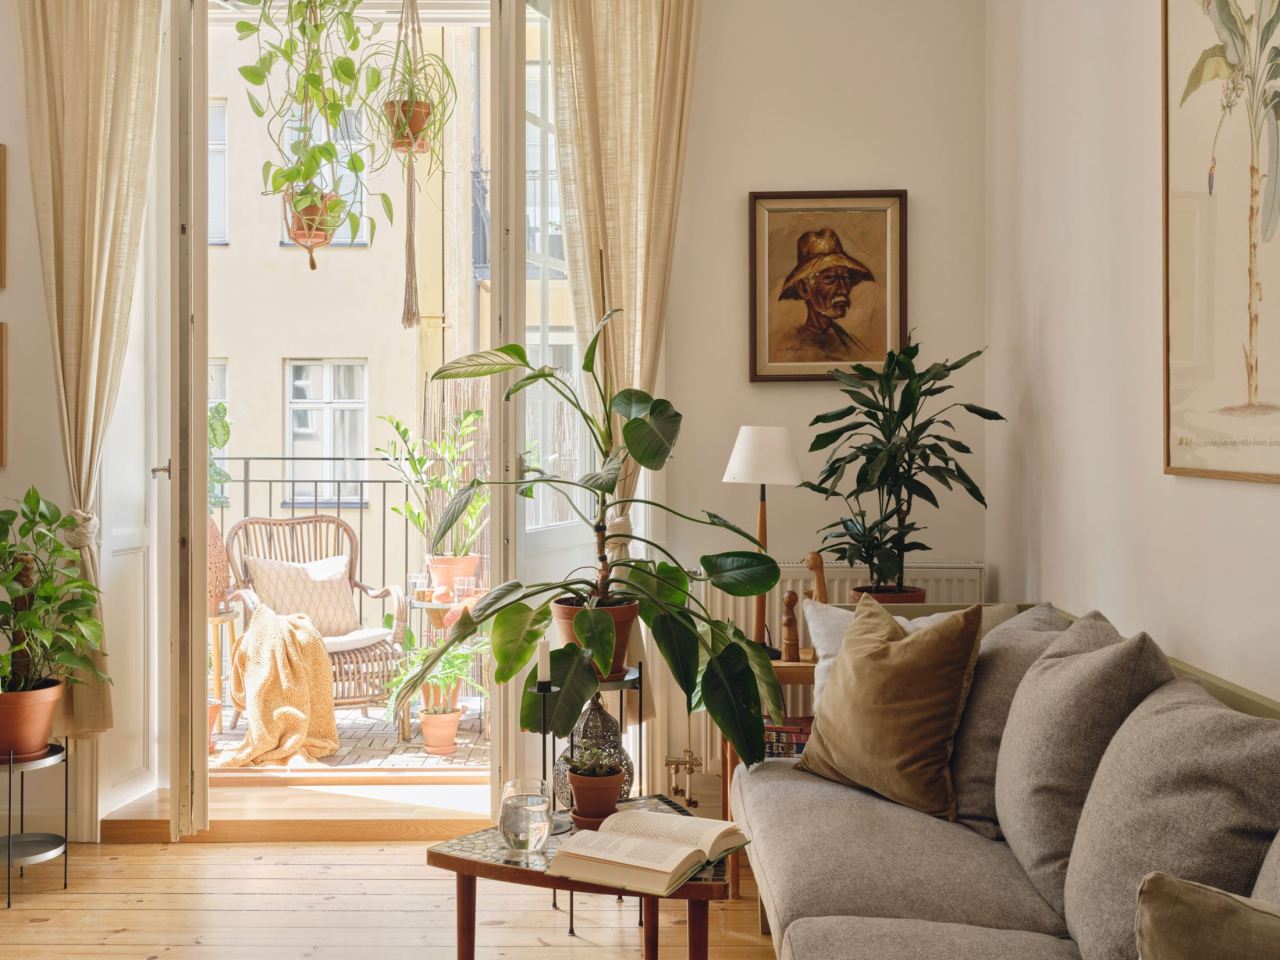 Charming small studio apartment full of plants